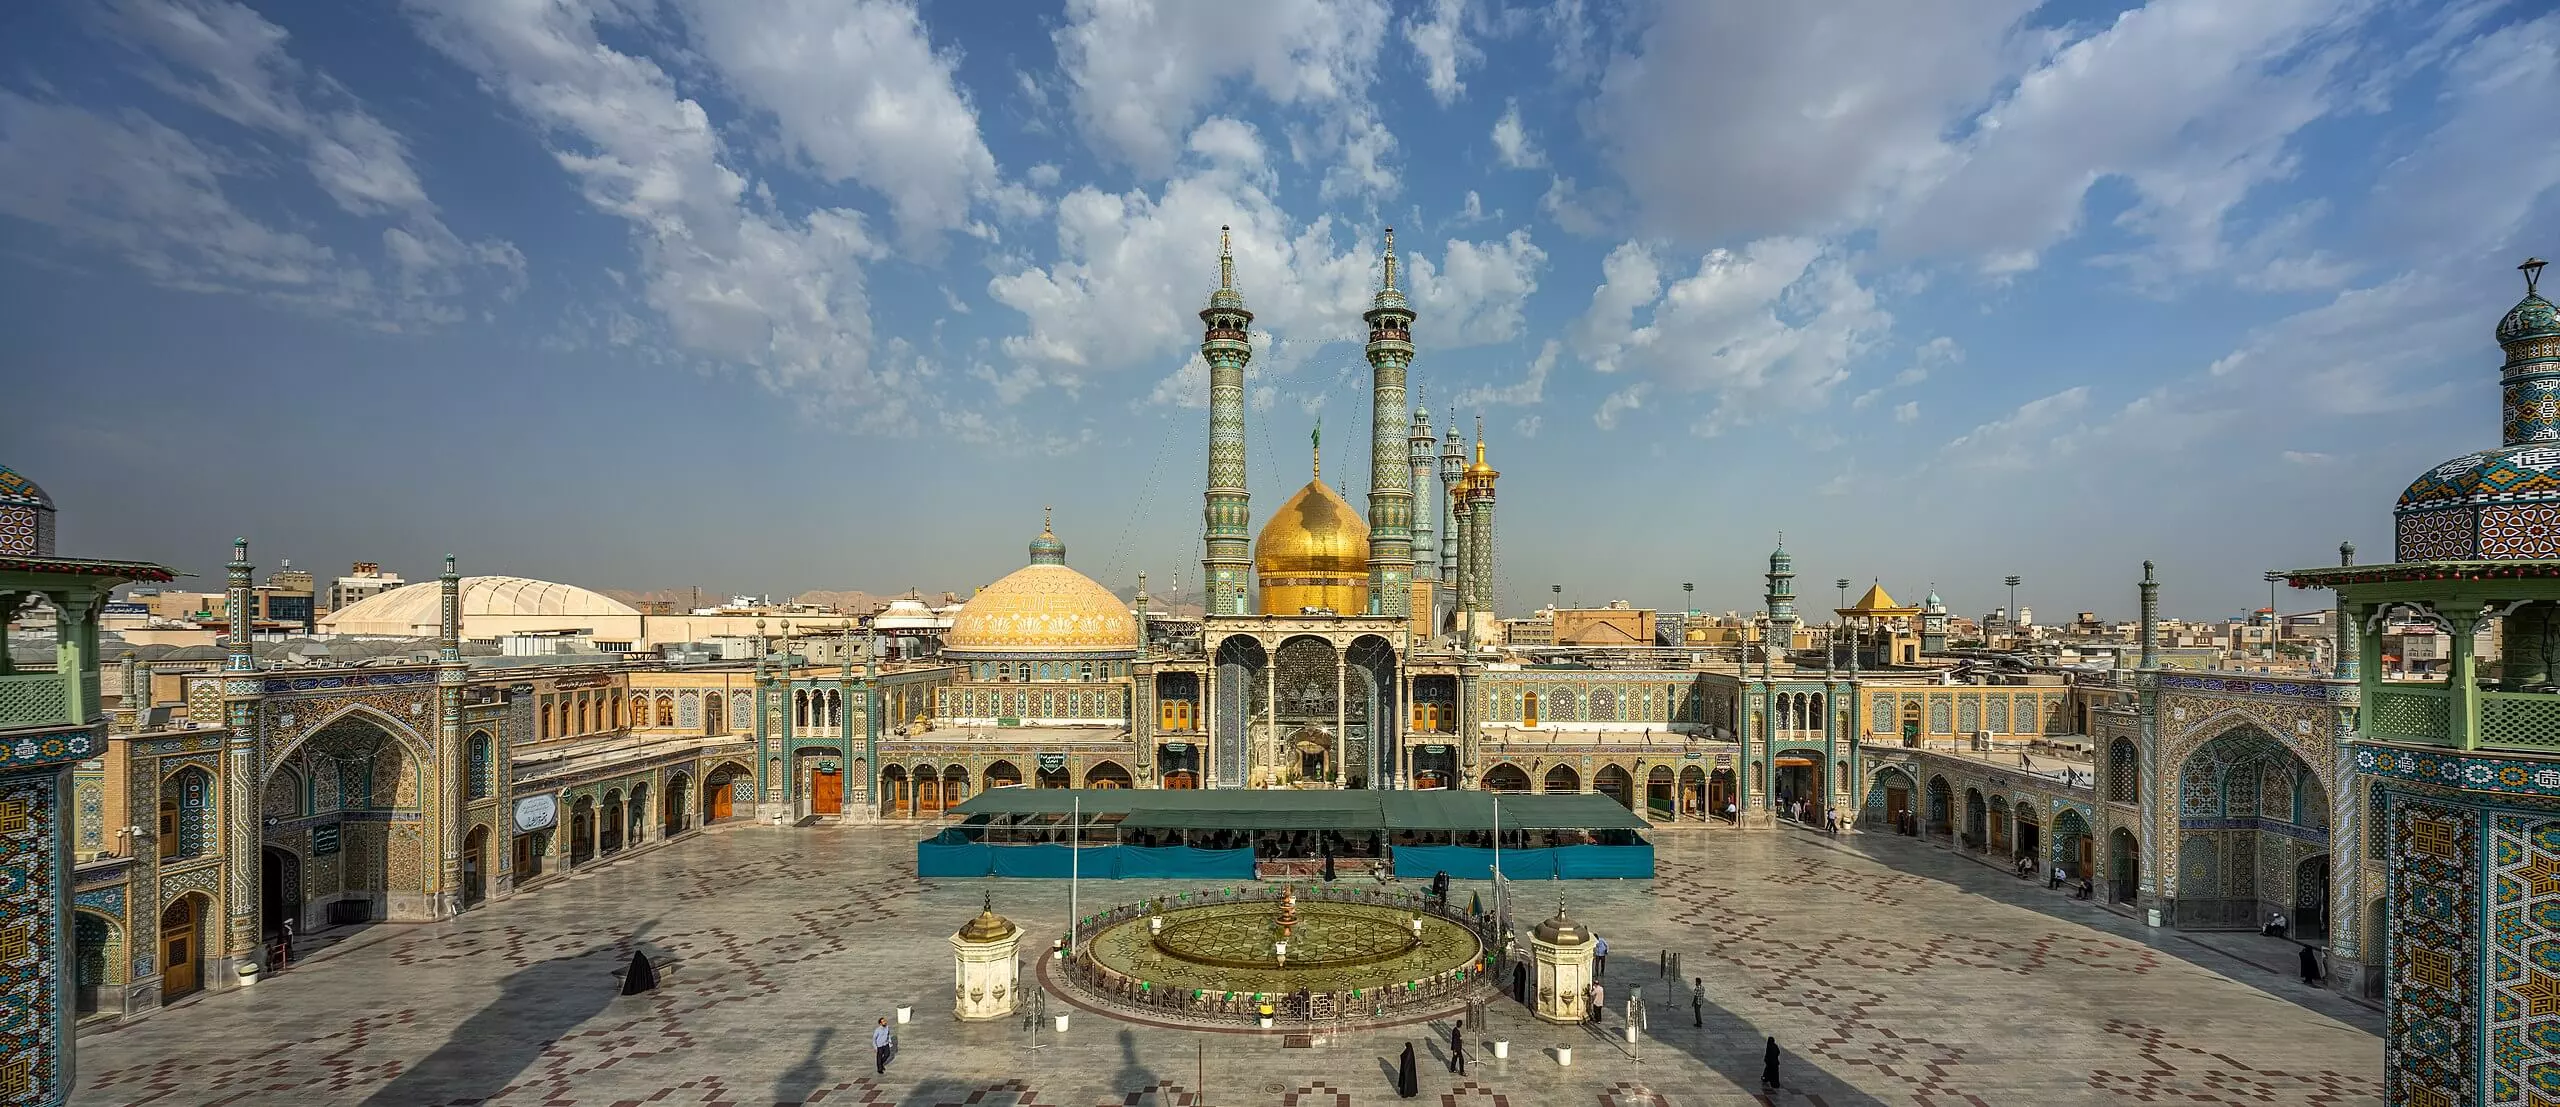 Fatimah-masume-shrine-in-qom